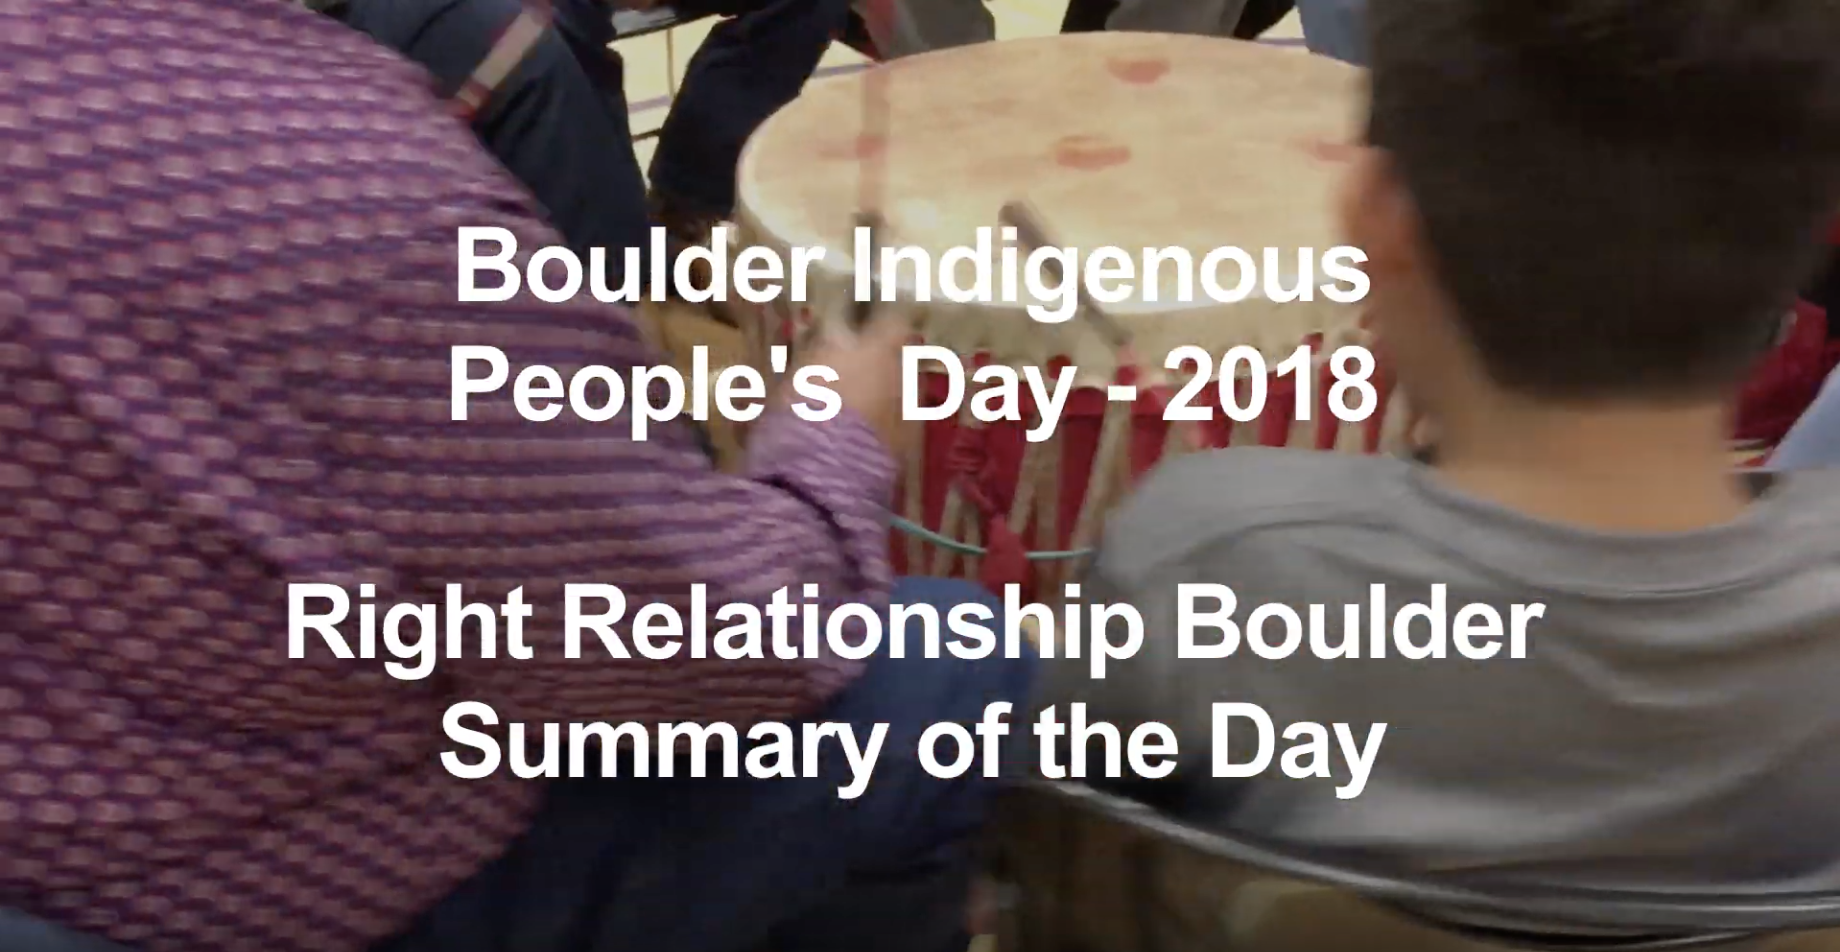 Boulder Indigenous People's Day